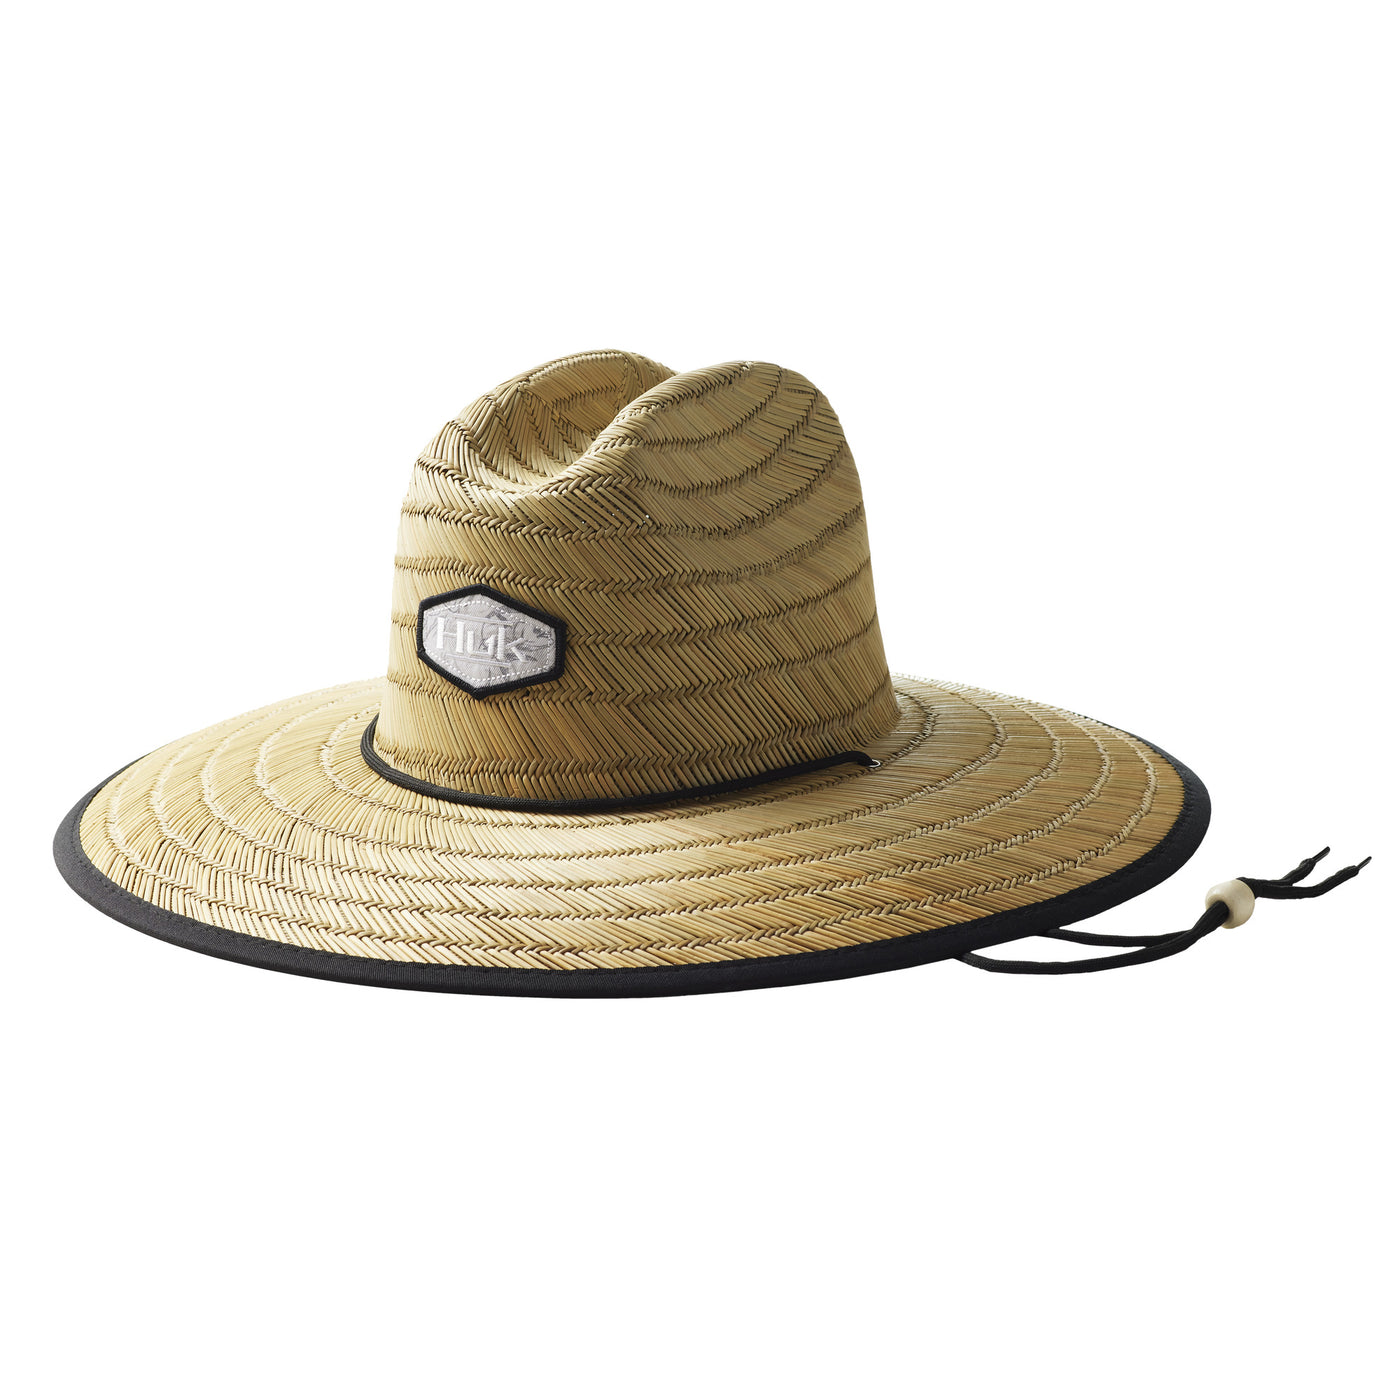 Huk Palm Slam Straw Hat